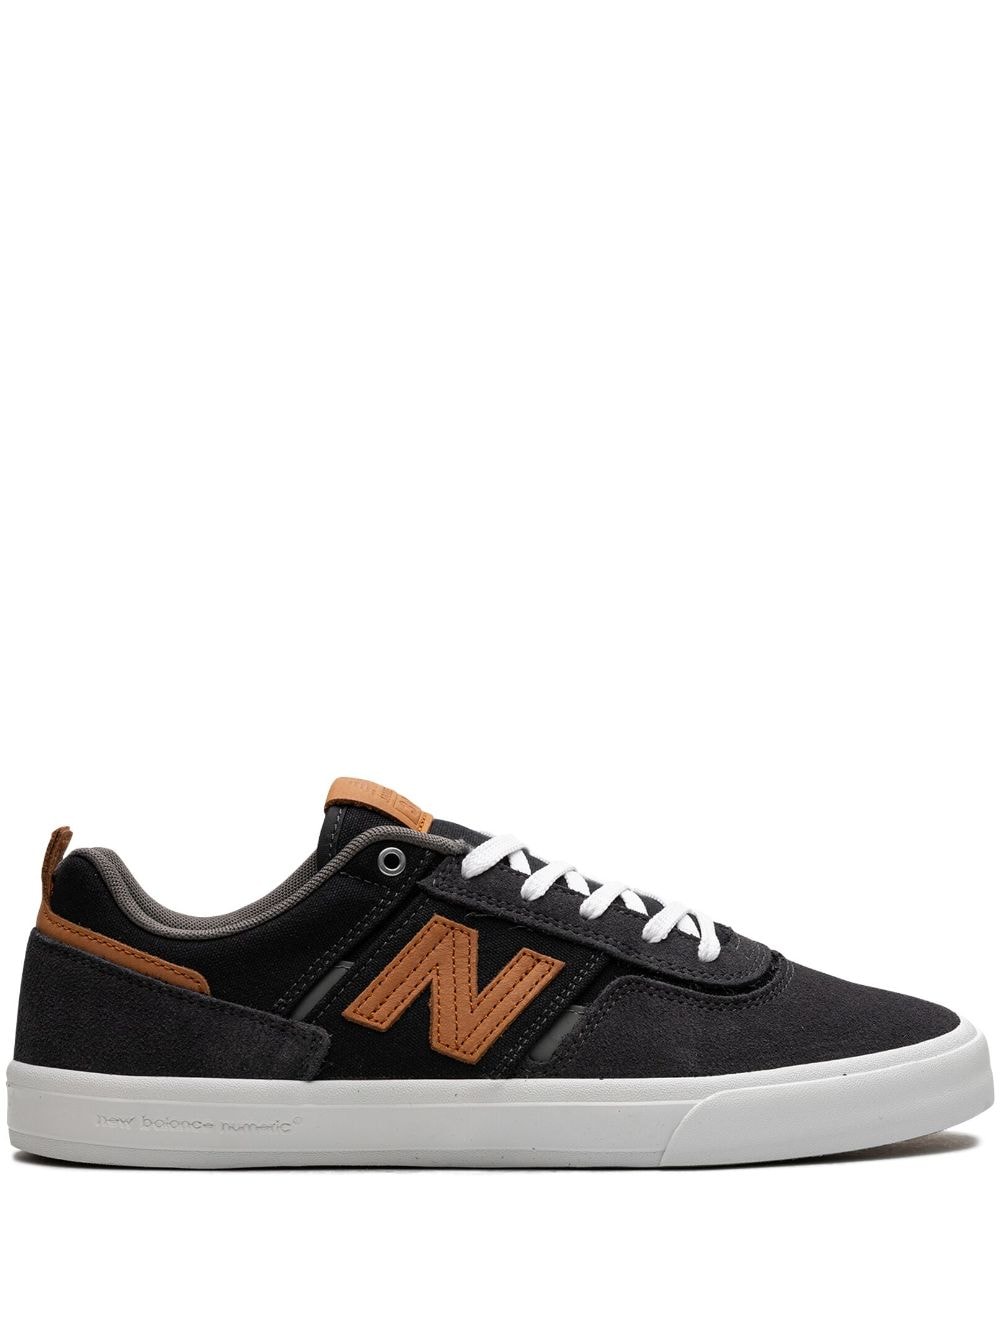 New Balance Numeric 306 "Jamie Foy" sneakers - Black